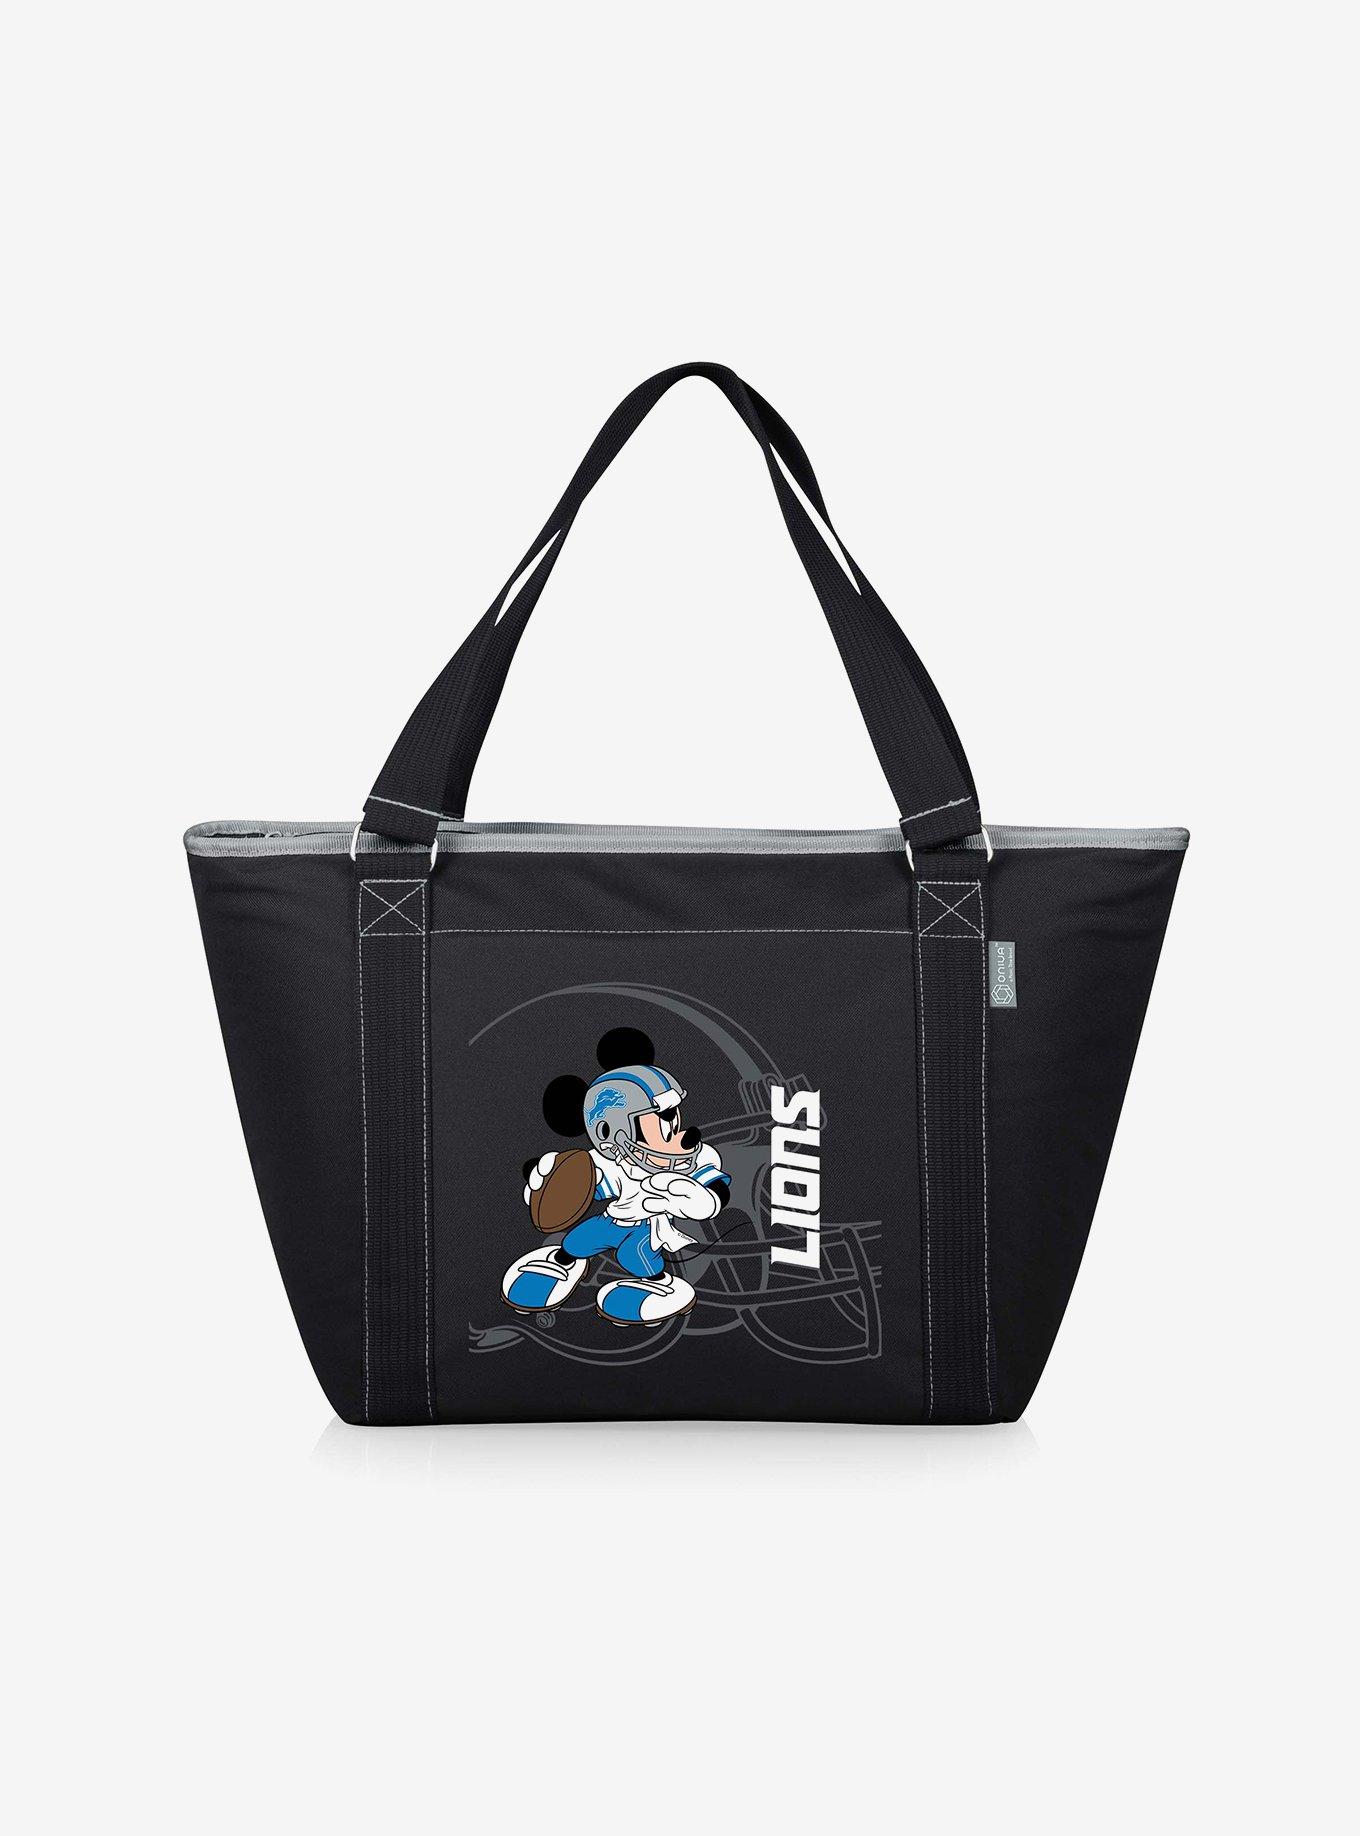 Disney Mickey Mouse NFL Detroit Lions Tote Cooler Bag